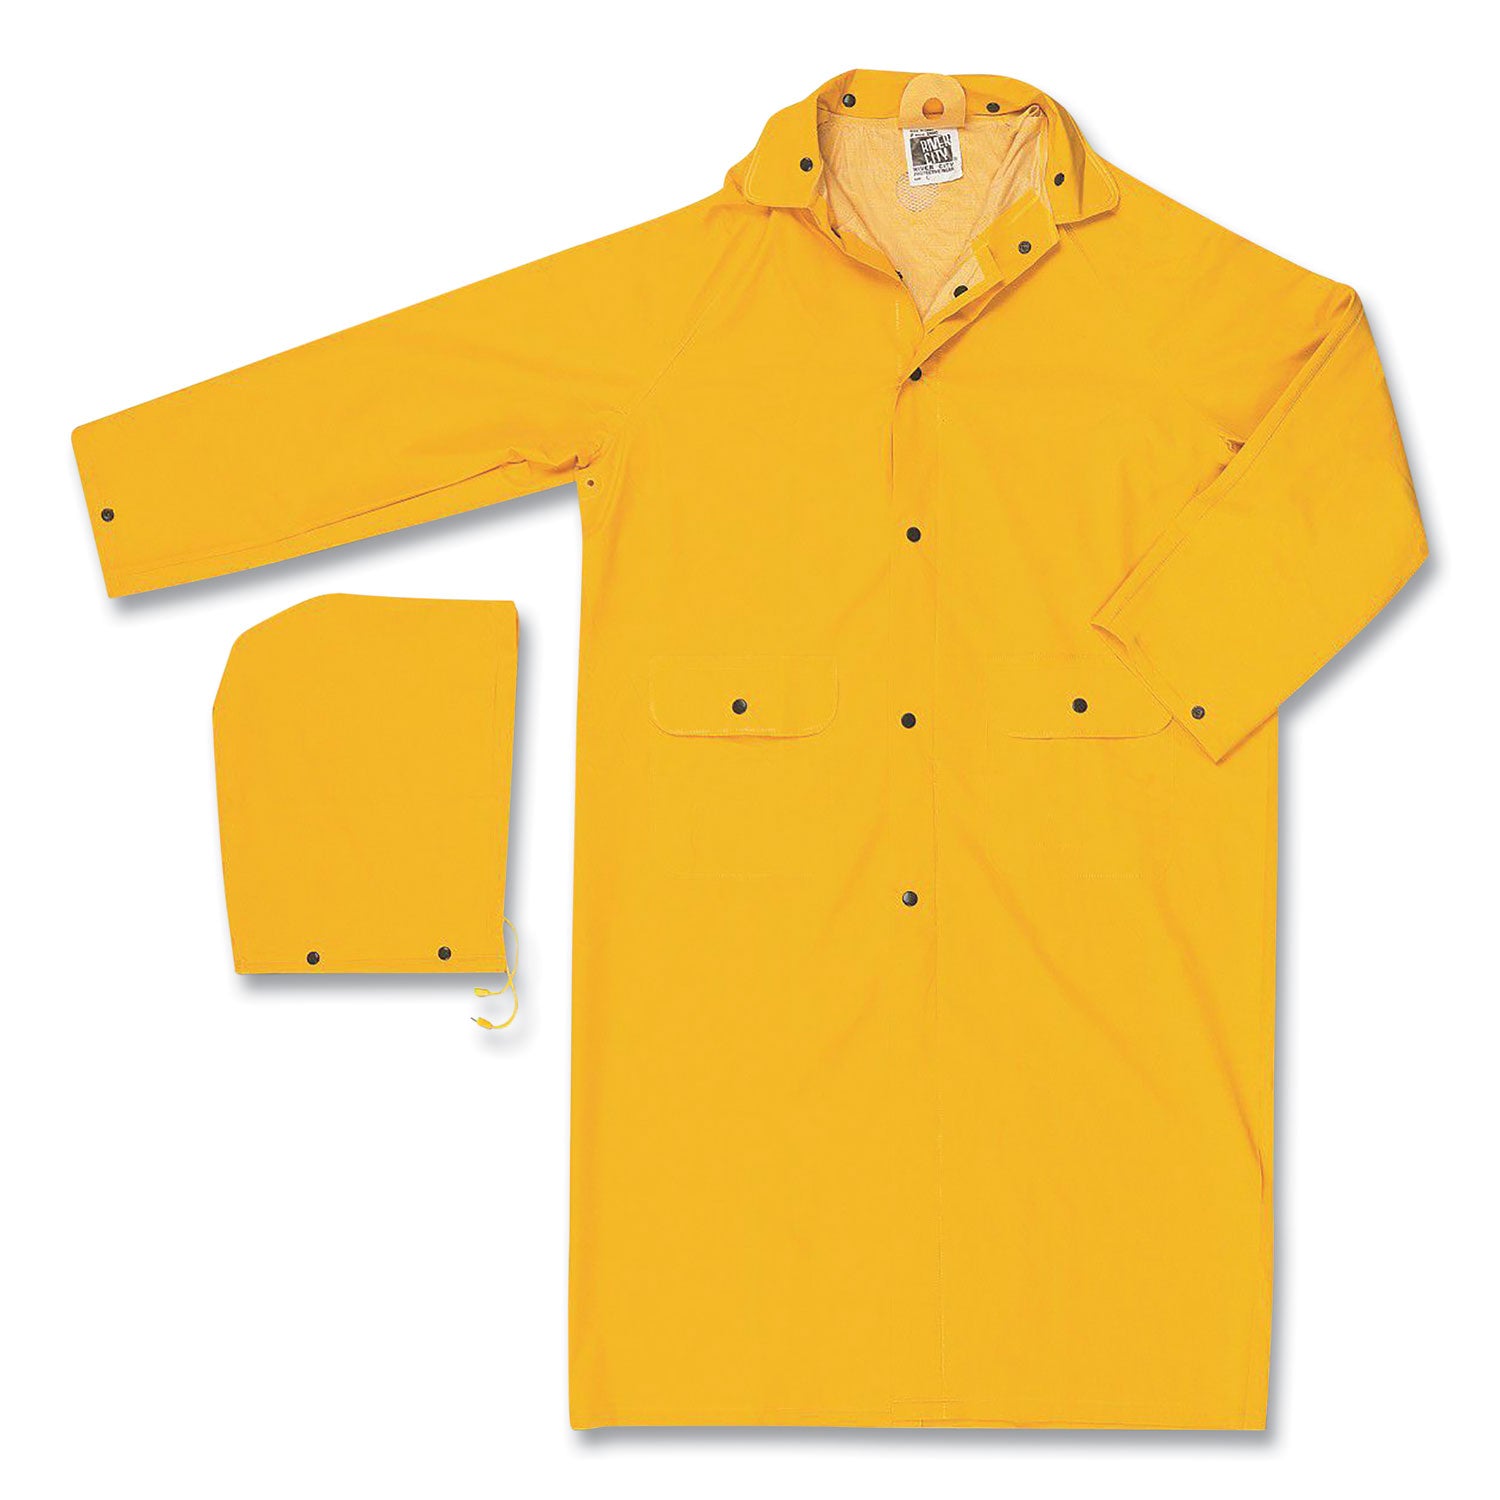 200c-yellow-classic-rain-coat-x-large_rvr200cxl - 1